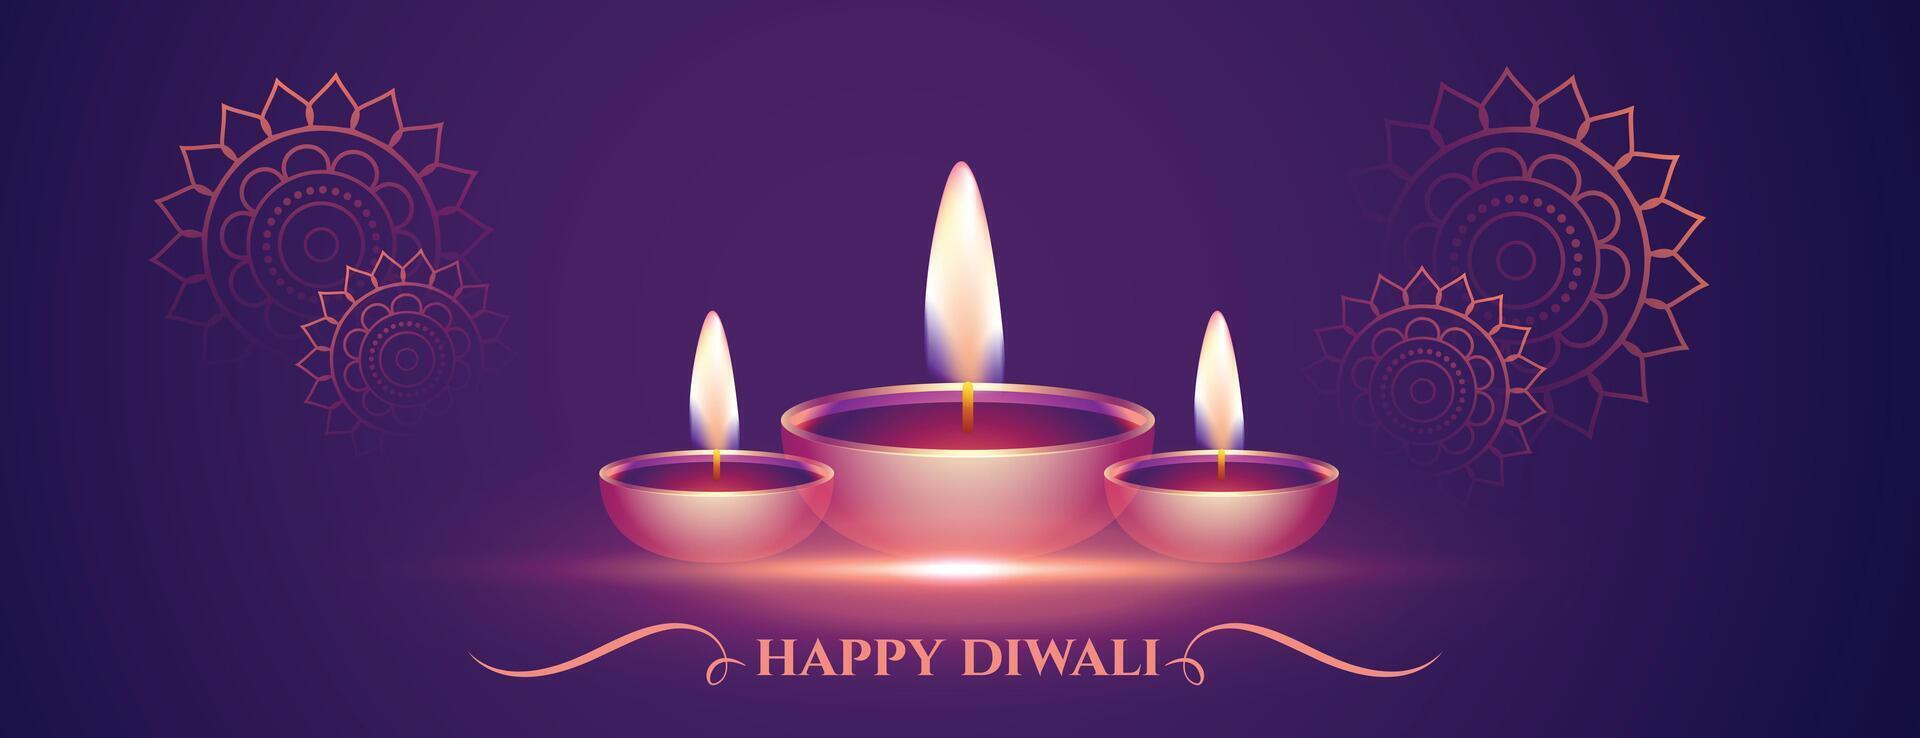 decorative happy diwali purple banner with diya design vector